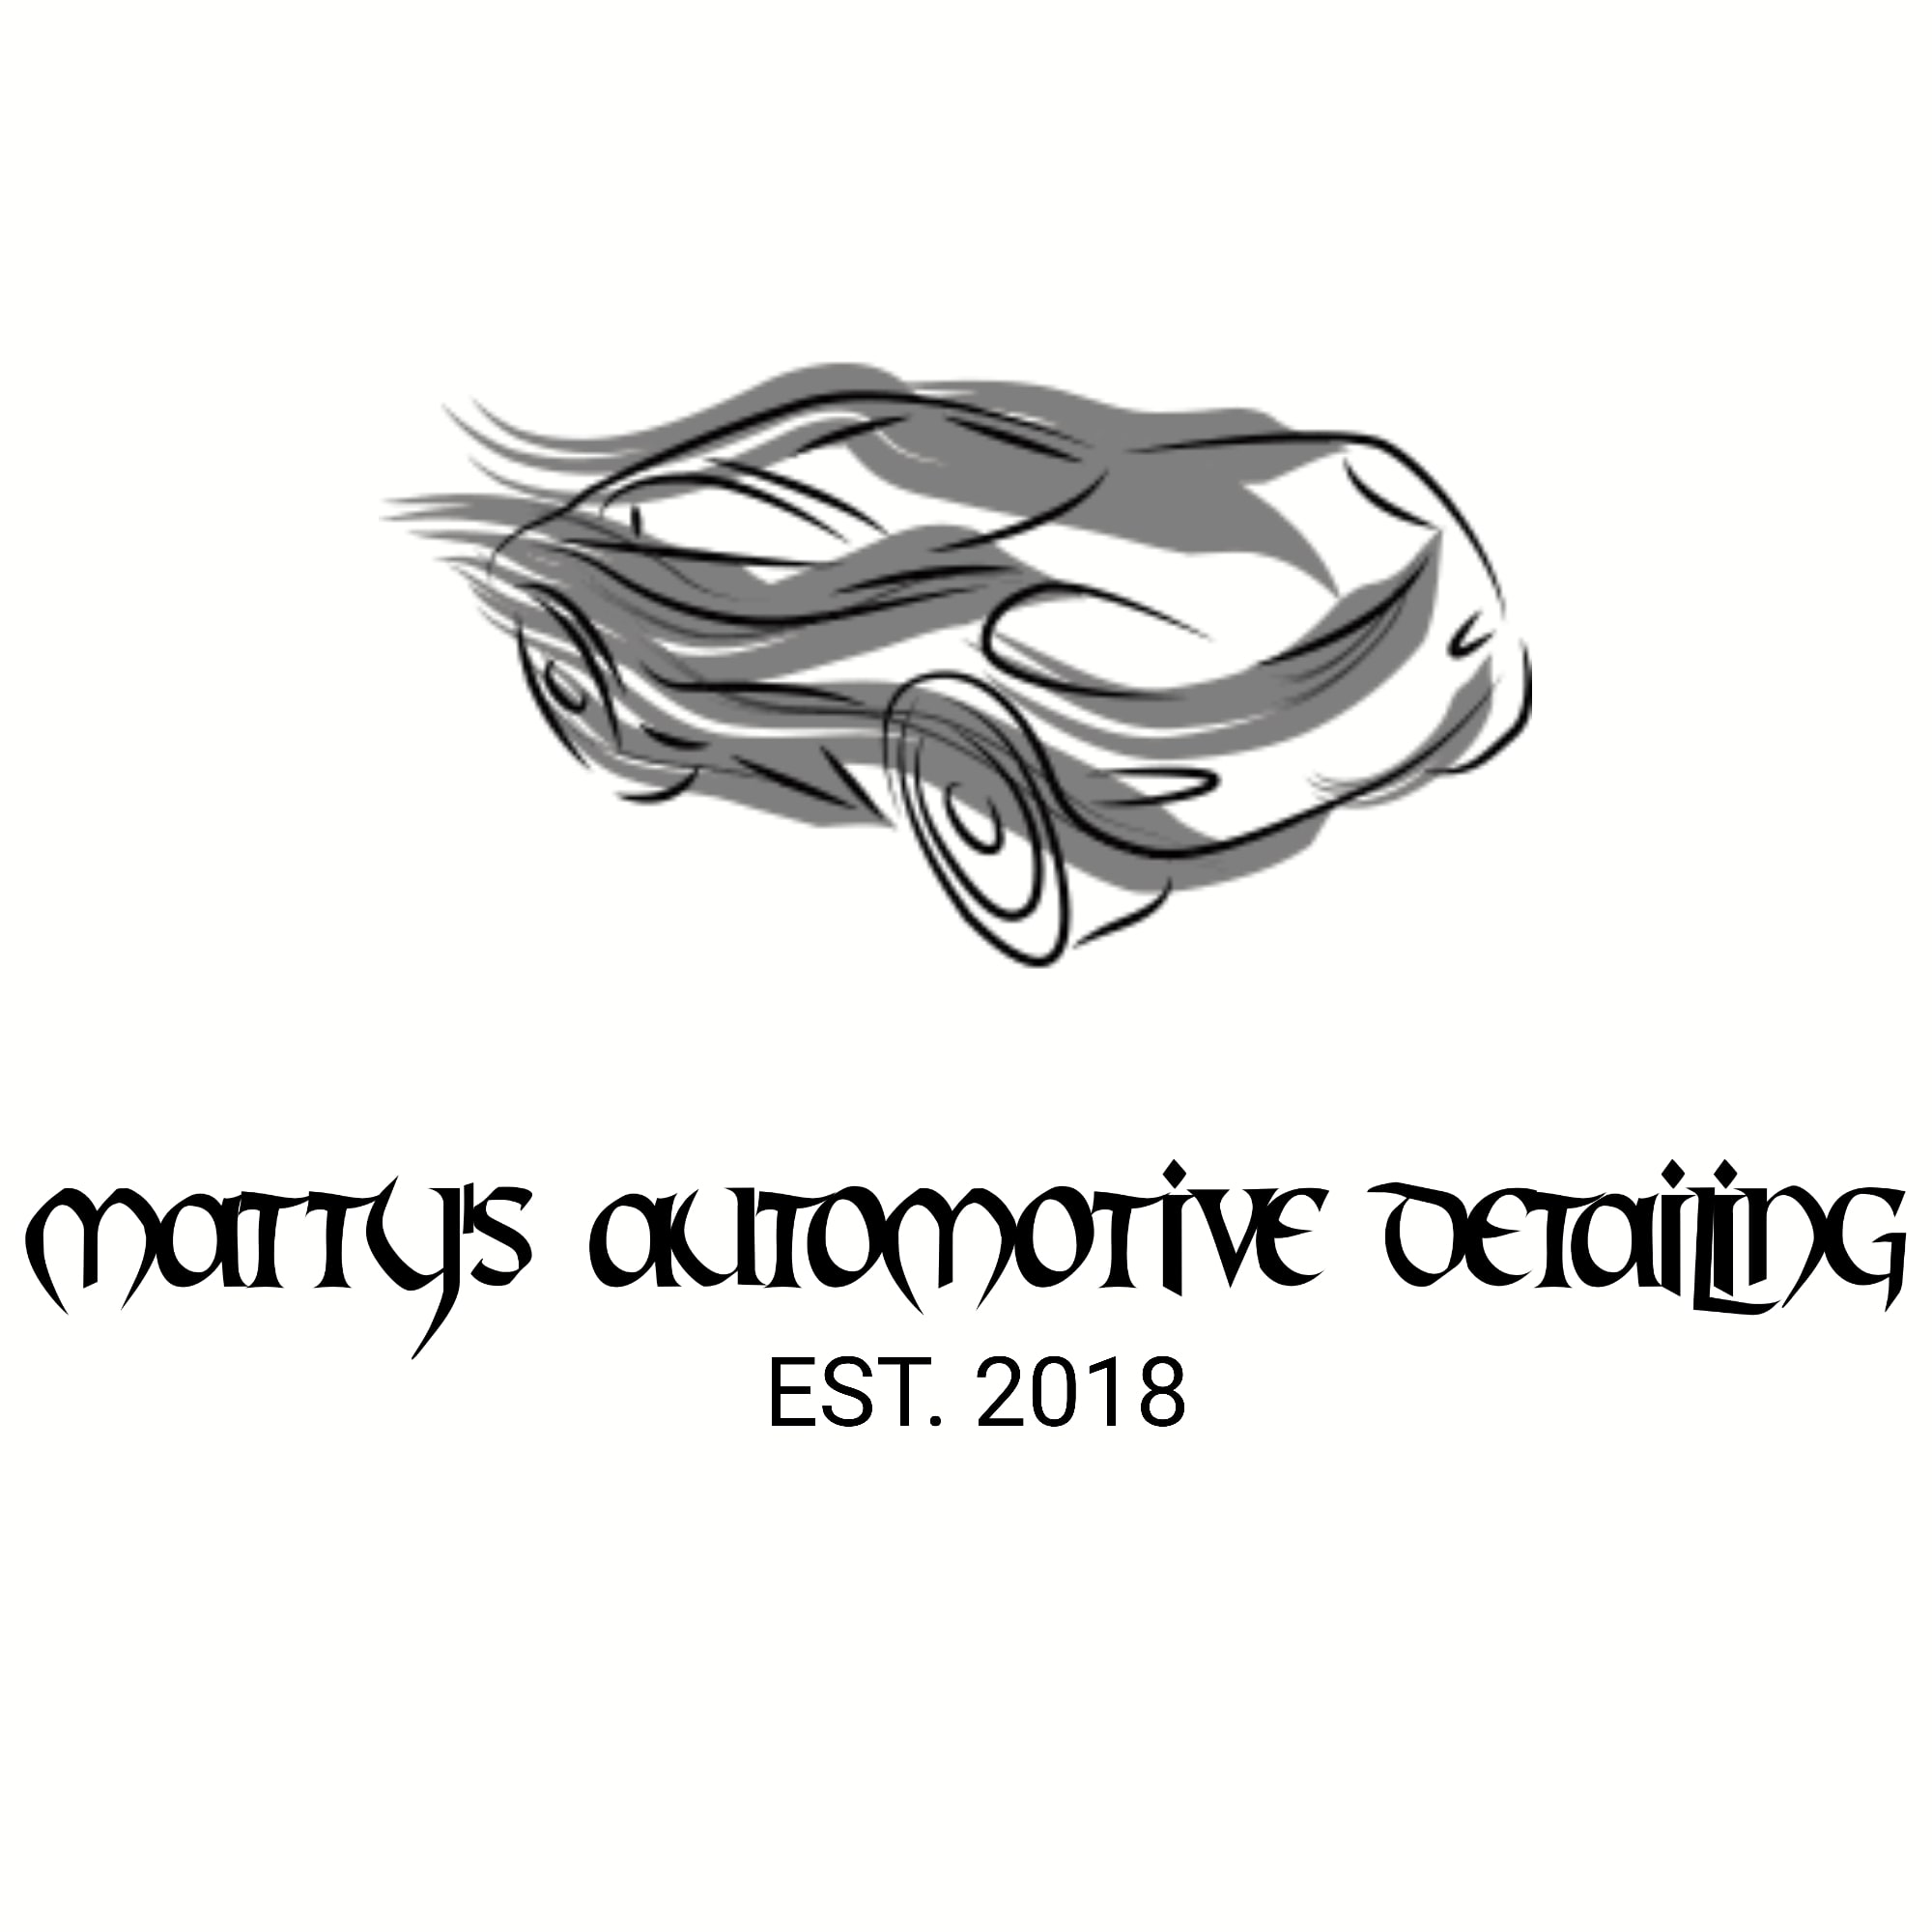 Matty's Automotive Detailing